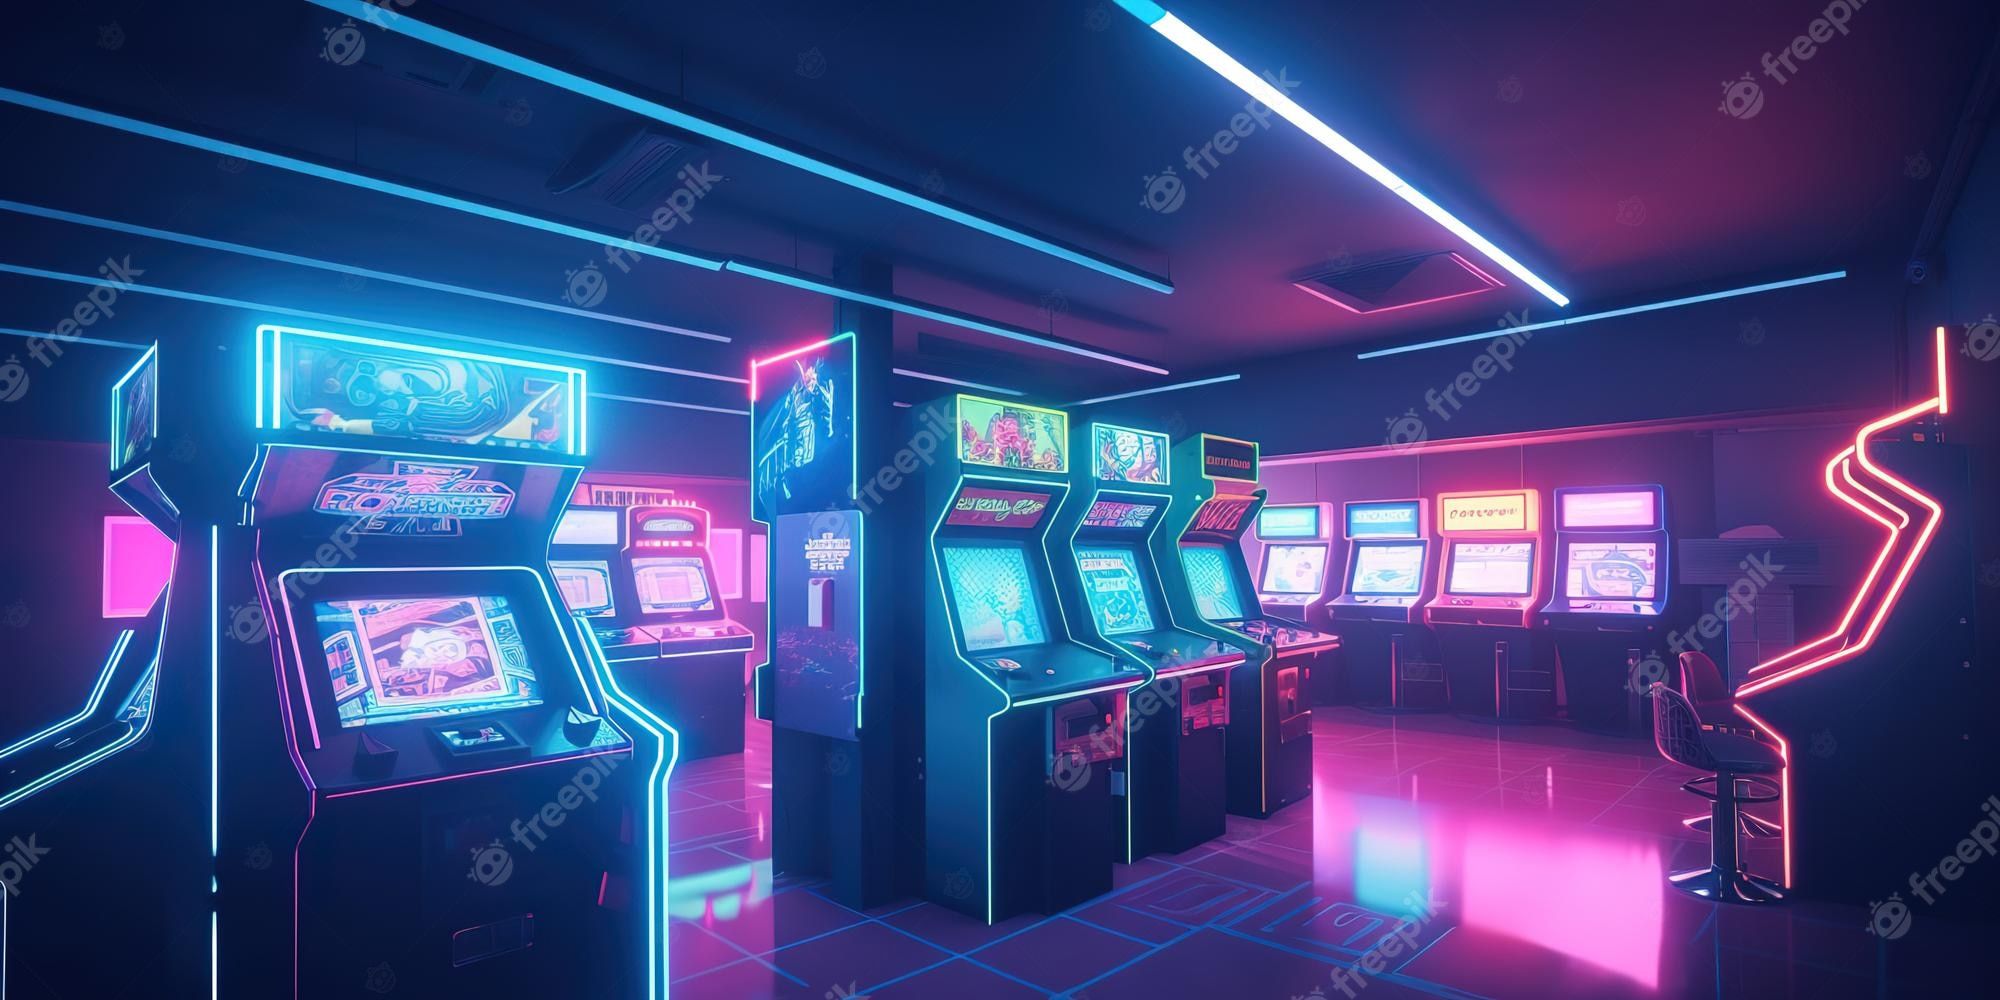 Premium Photo. Retro arcade machin room a synthwave hall with arcade machin 80s vibes cyberpunk colored futuristic